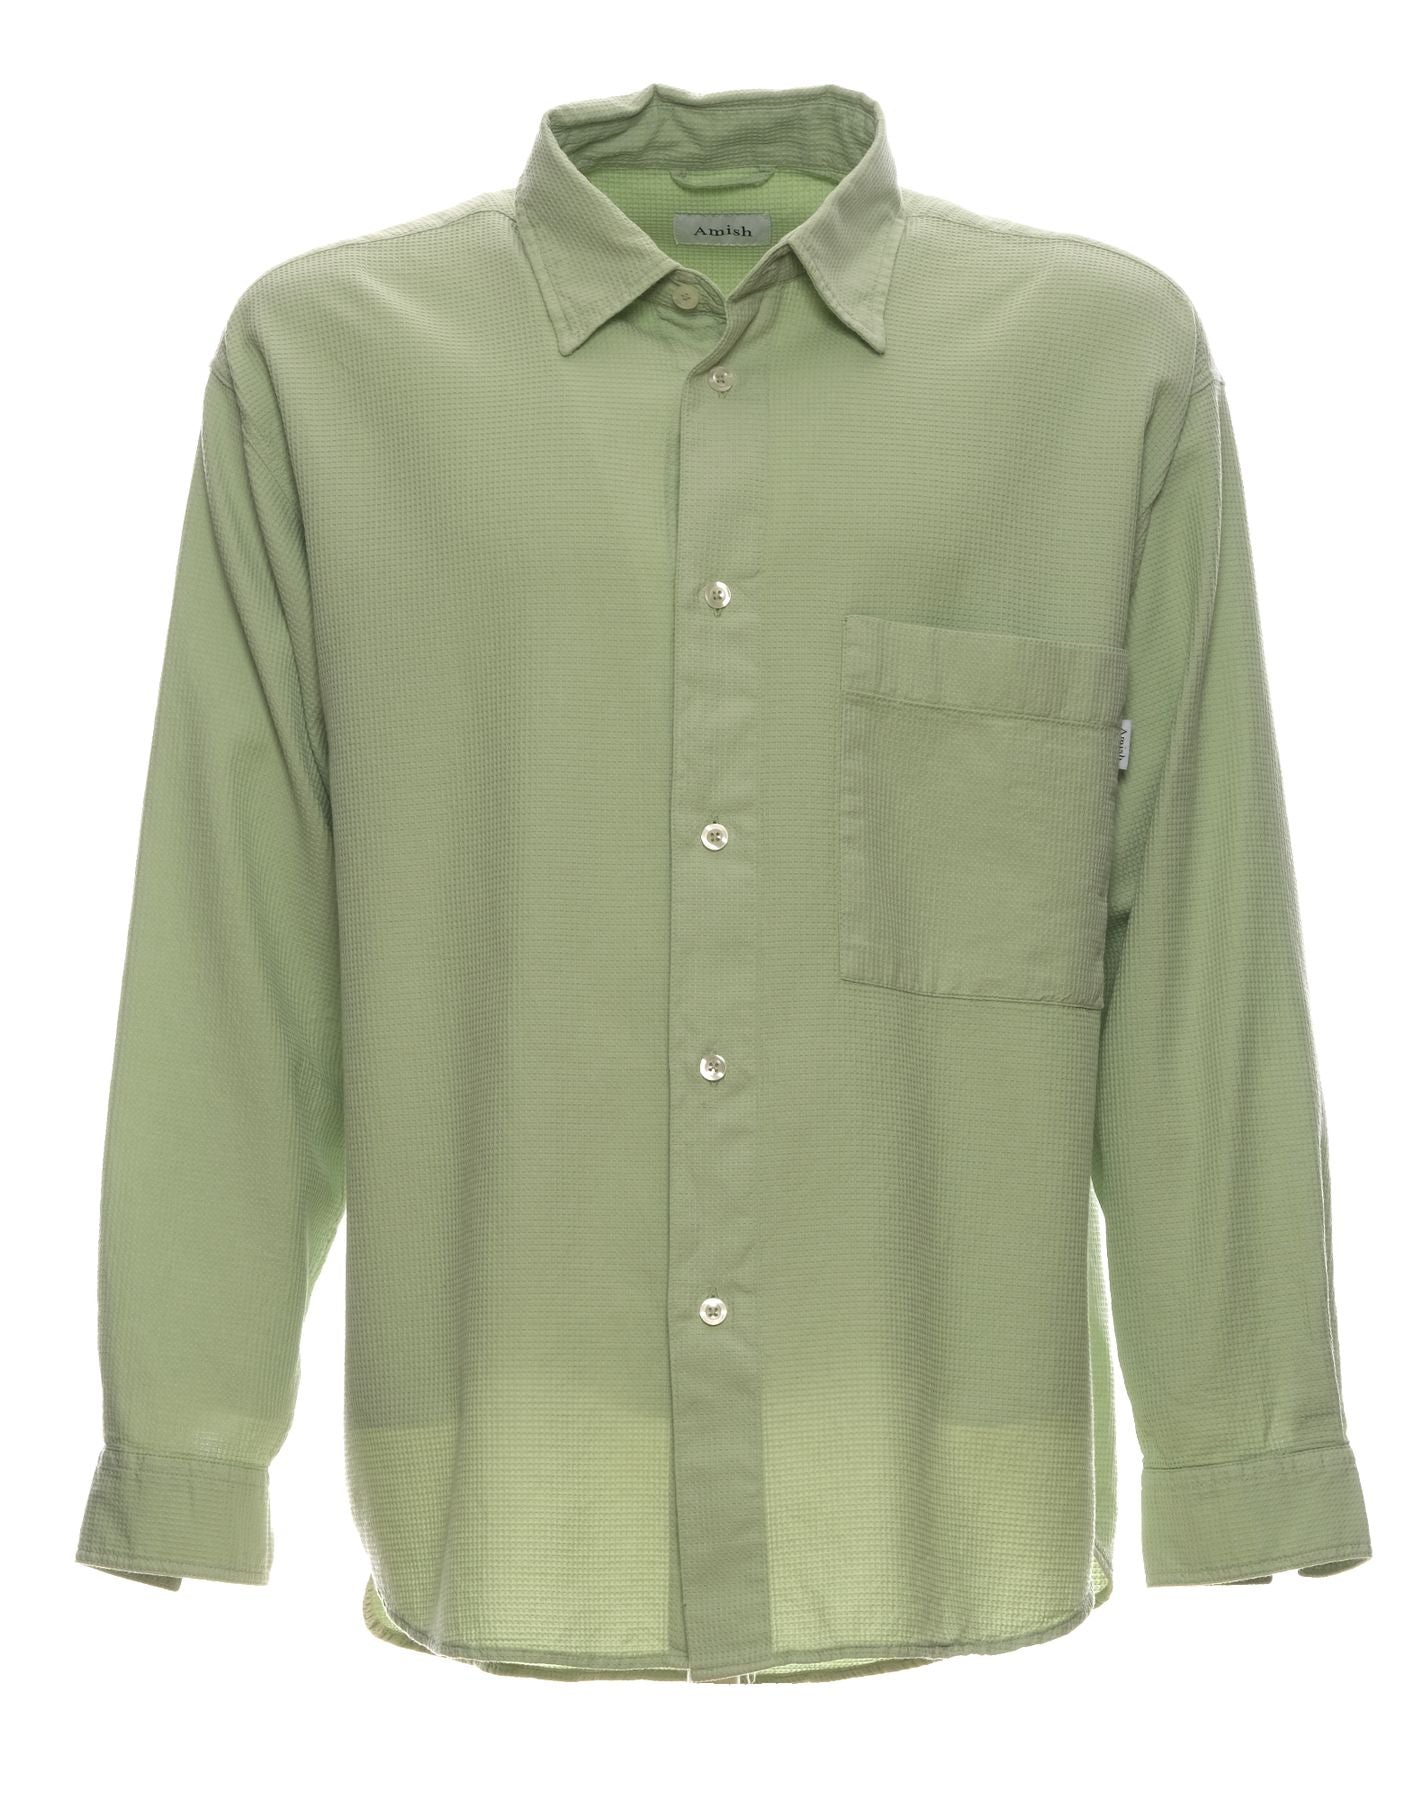 Camiseta man p23amx028p3730569 verde pálido Amish